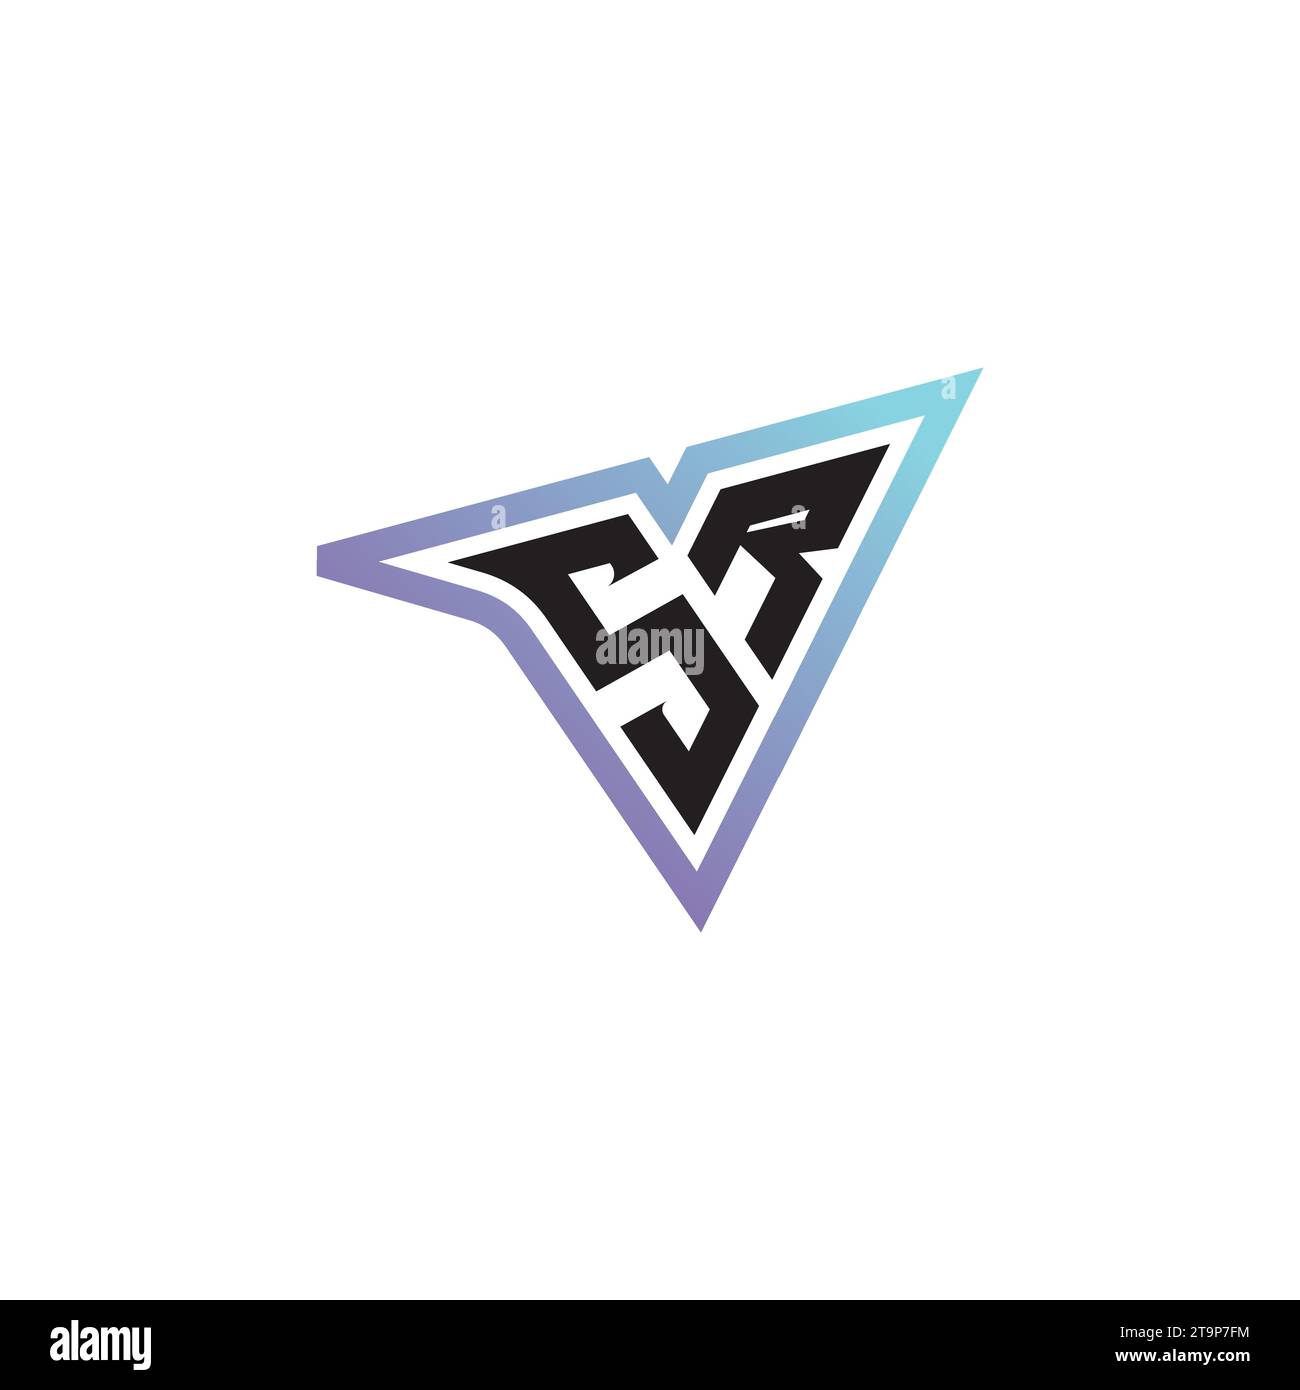 SR letter combination cool logo esport or gaming initial logo as a inspirational concept design Stock Vector